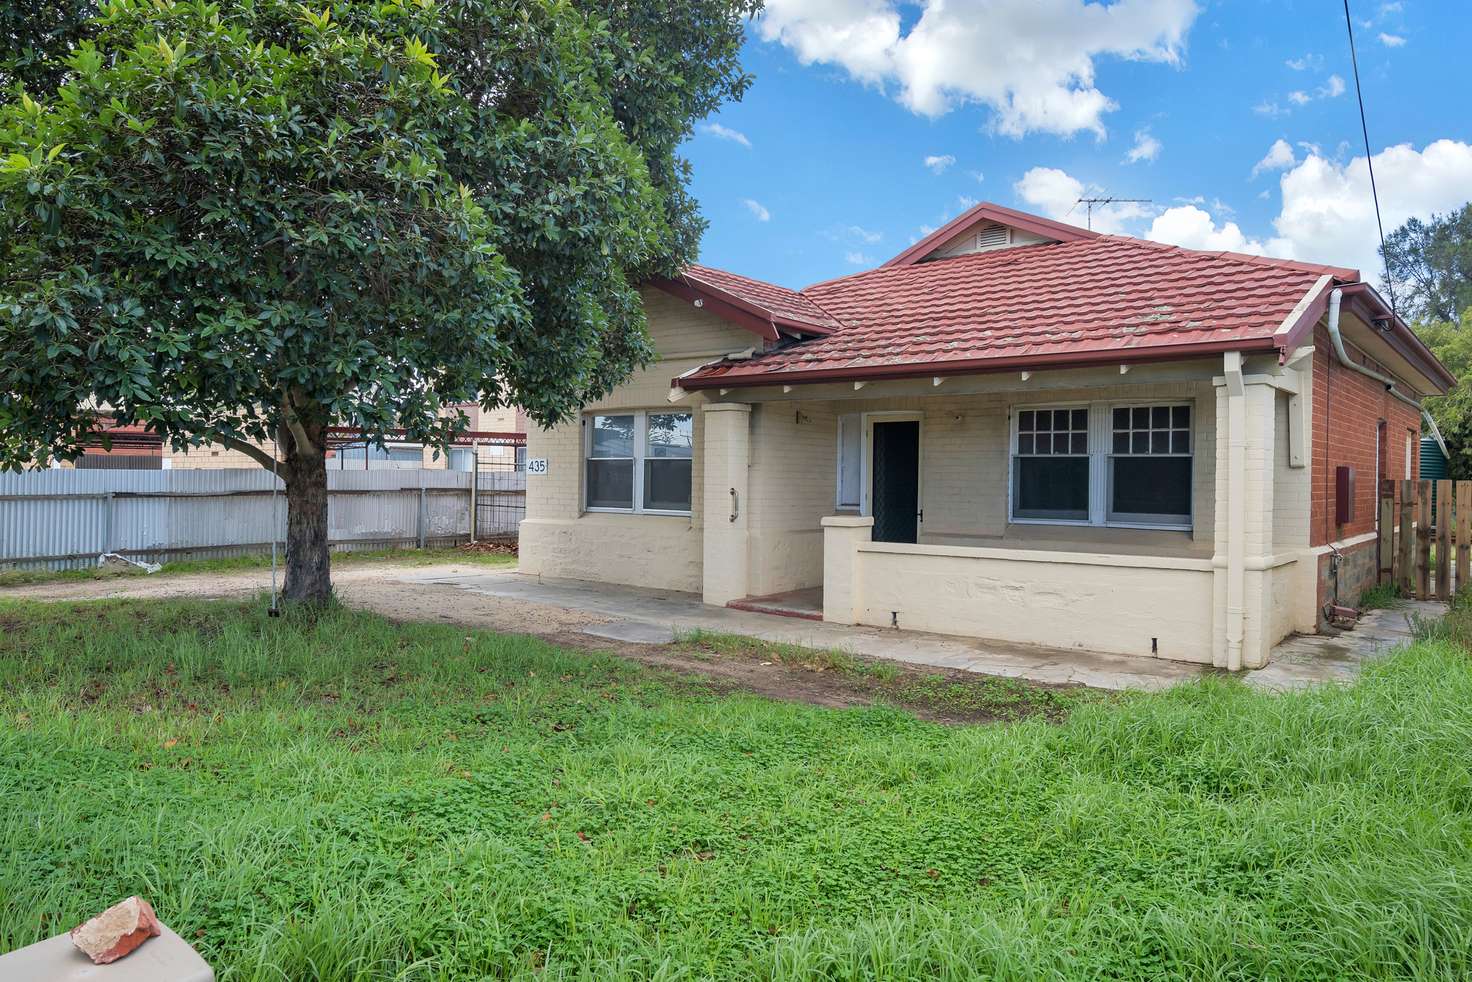 Main view of Homely house listing, 435 Churchill Rd, Kilburn SA 5084